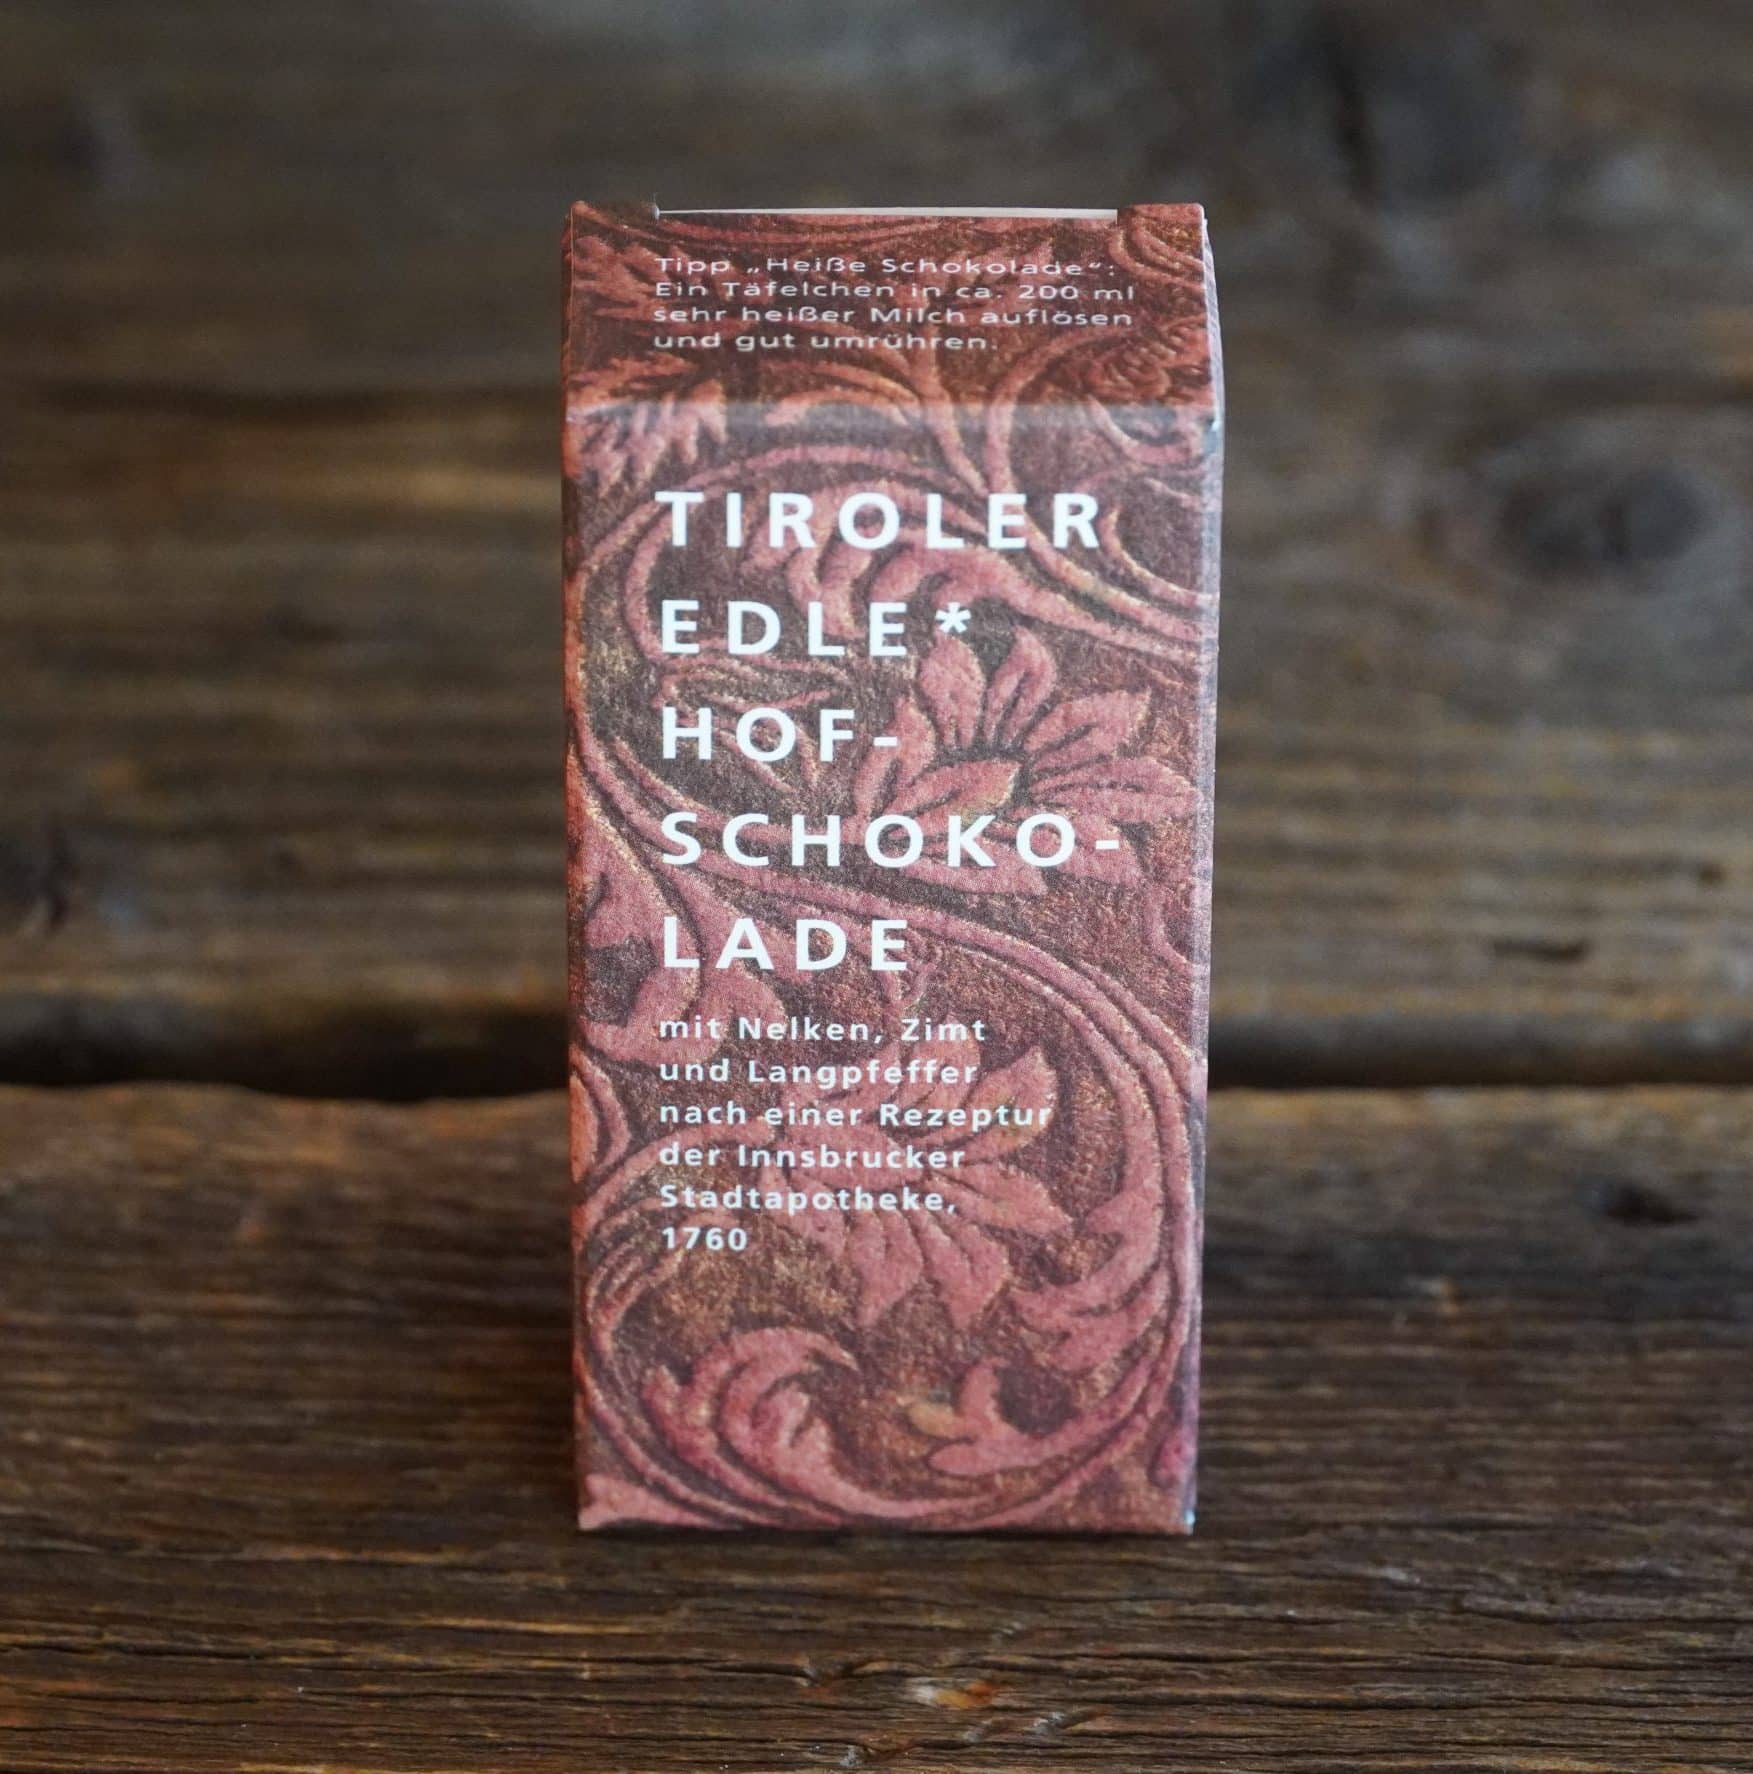 Tiroler Edle Hof-Schokolade, 42g